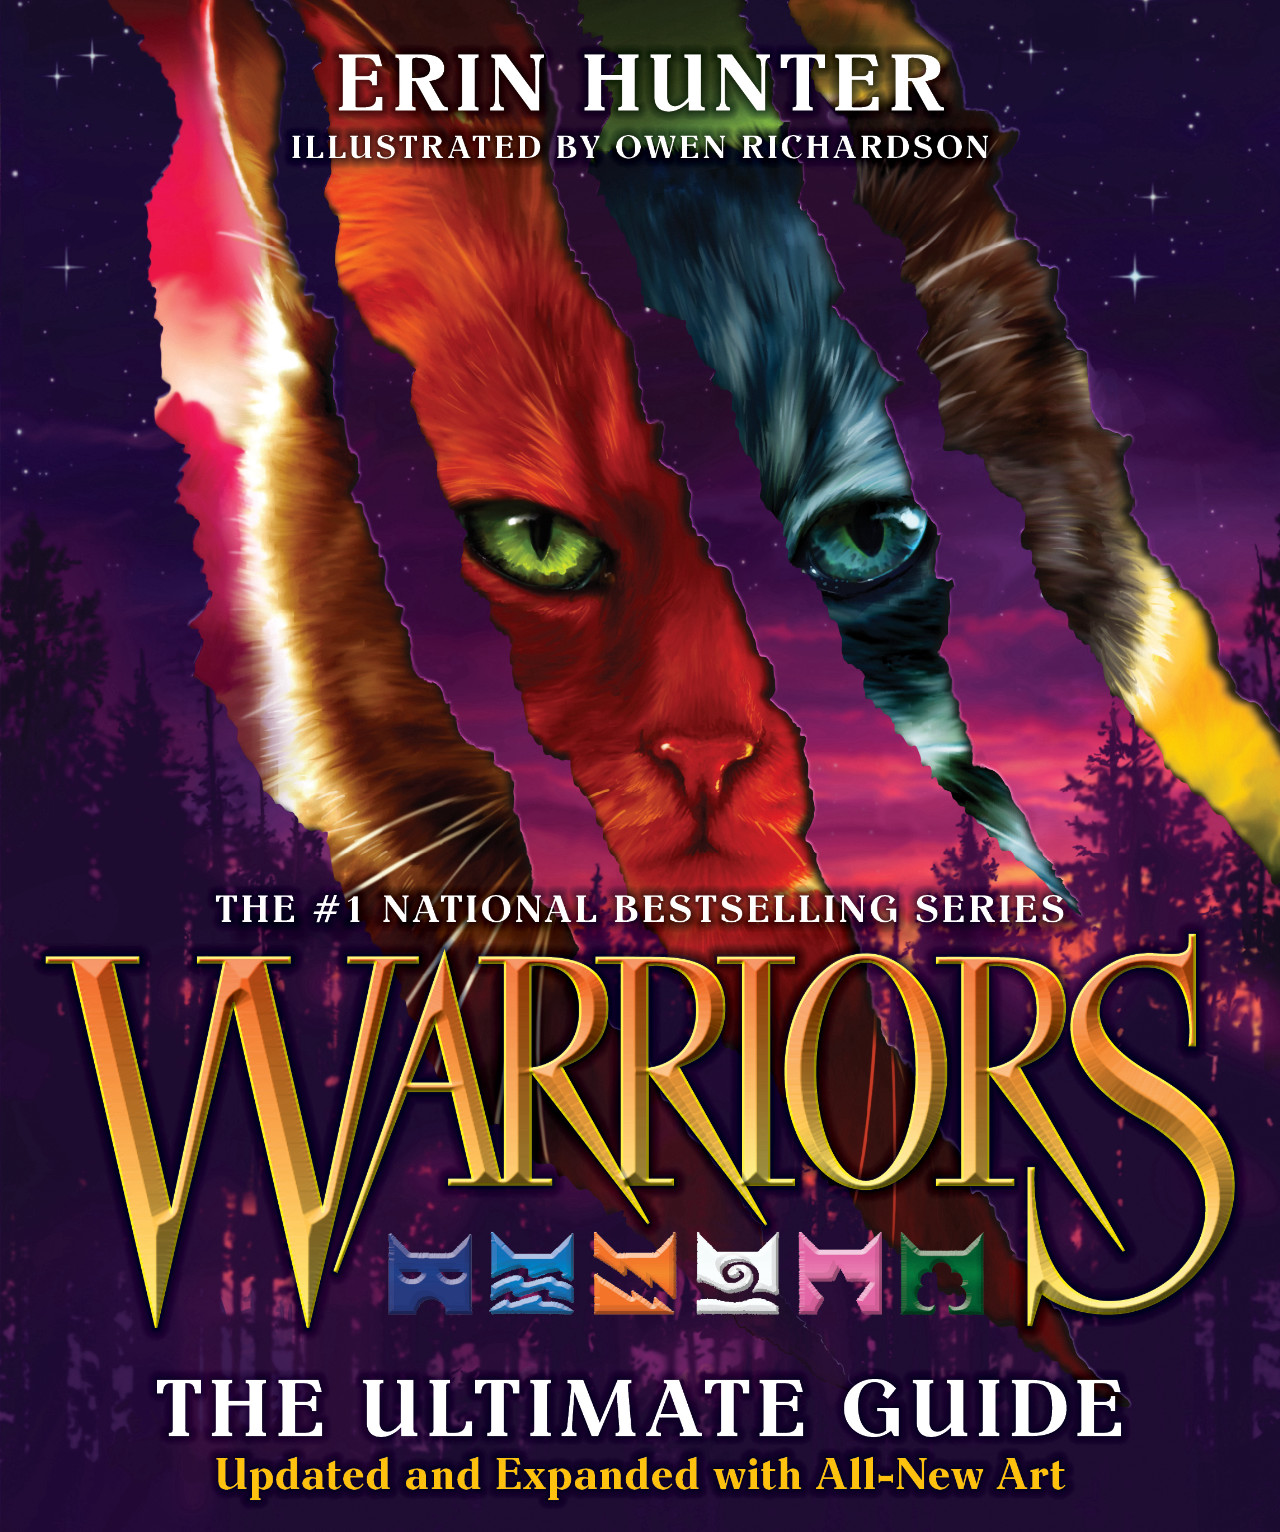 Warriors: The Broken Code #1: Lost Stars eBook by Erin Hunter - EPUB Book